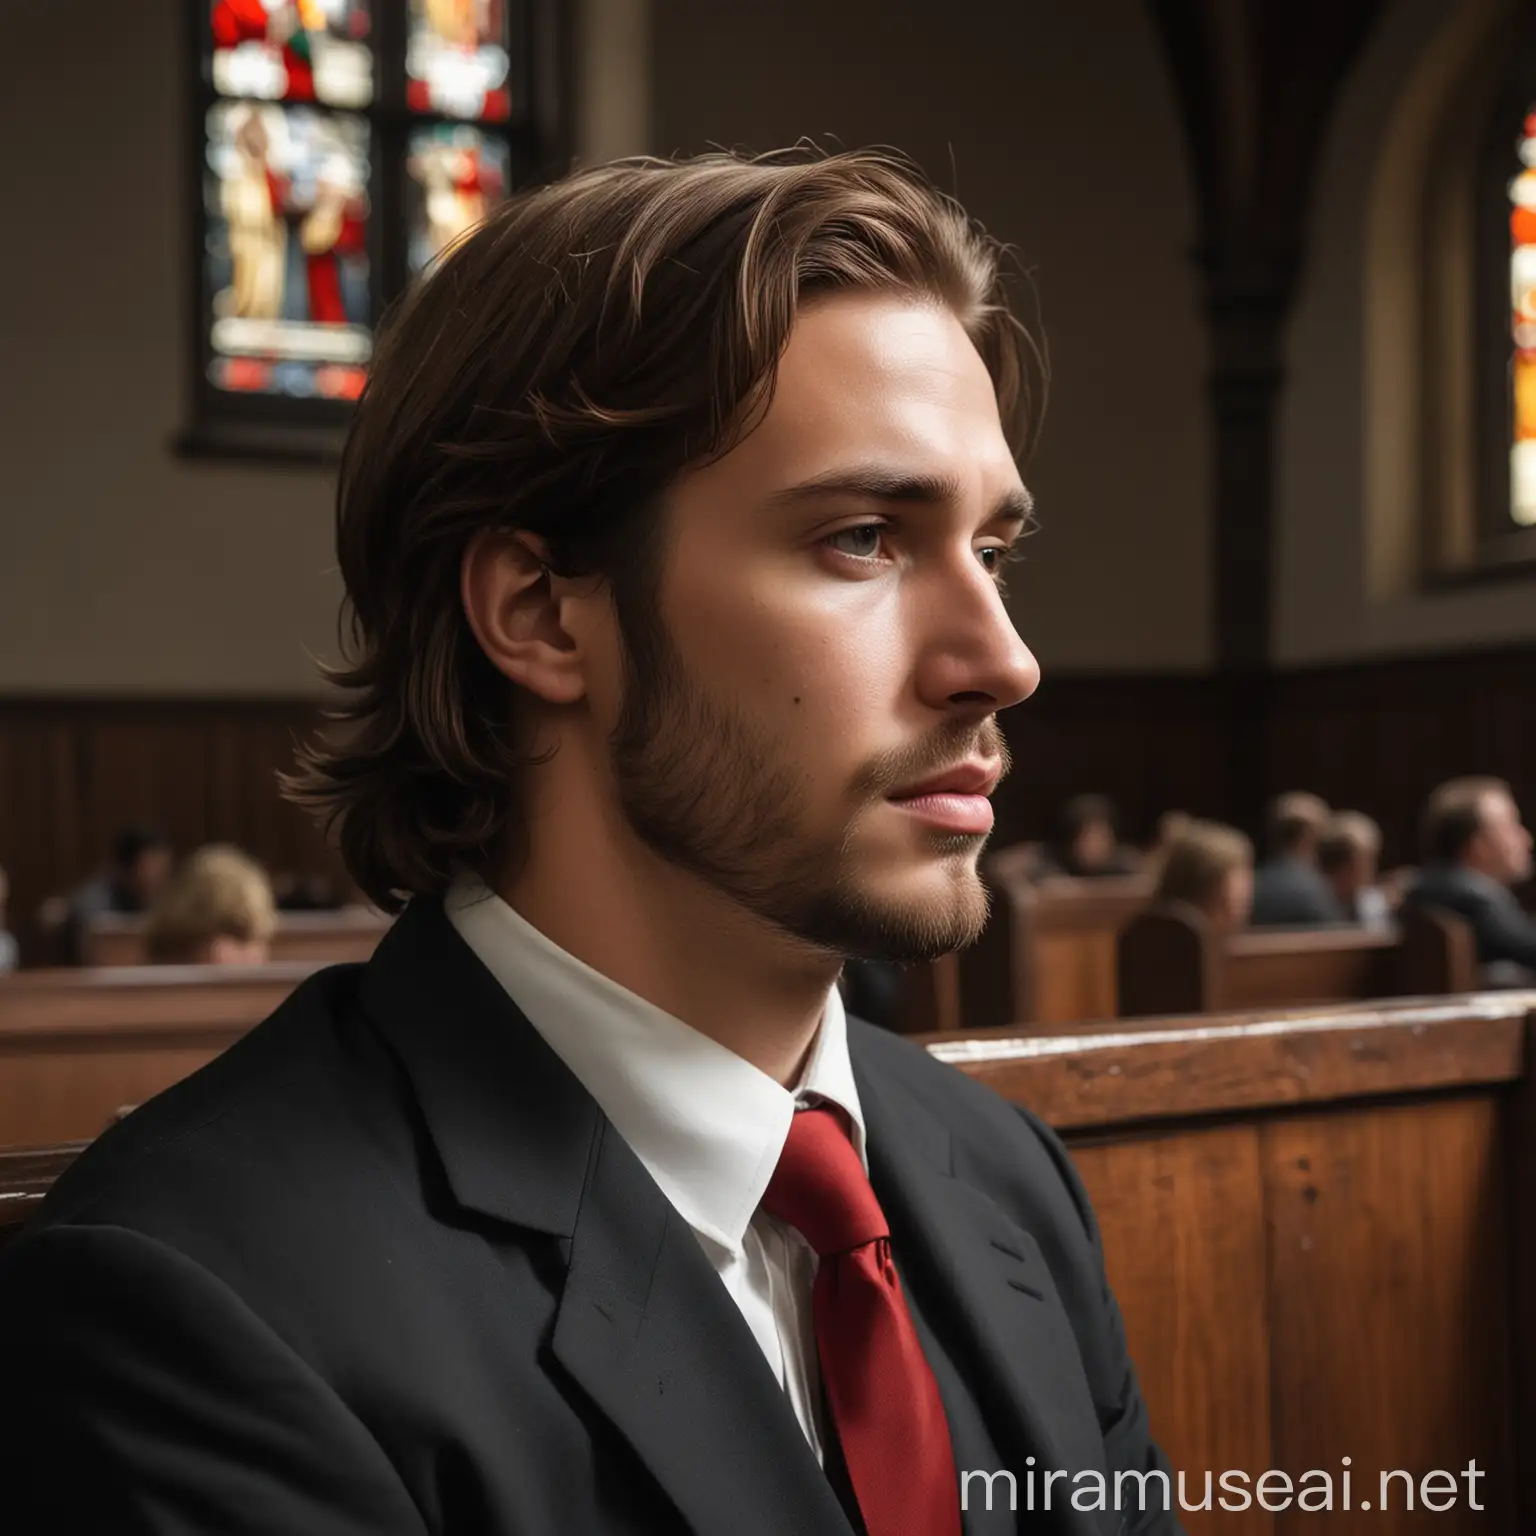 Contemplative Young Man in Dark Church Interior